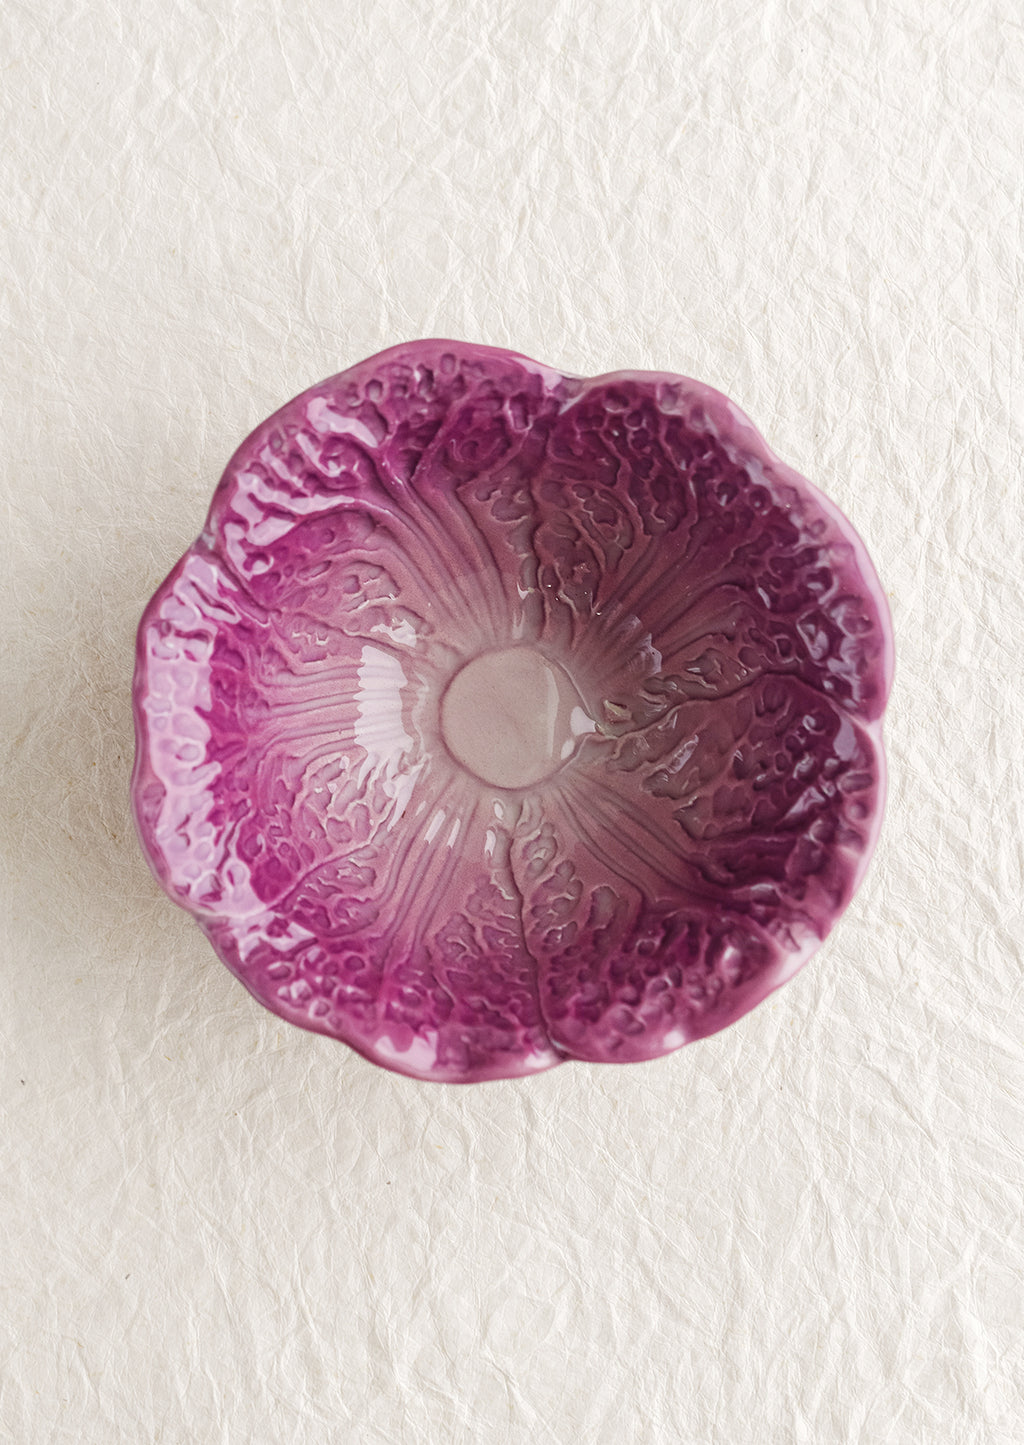 Large / Purple: A purple ceramic cabbage bowl.